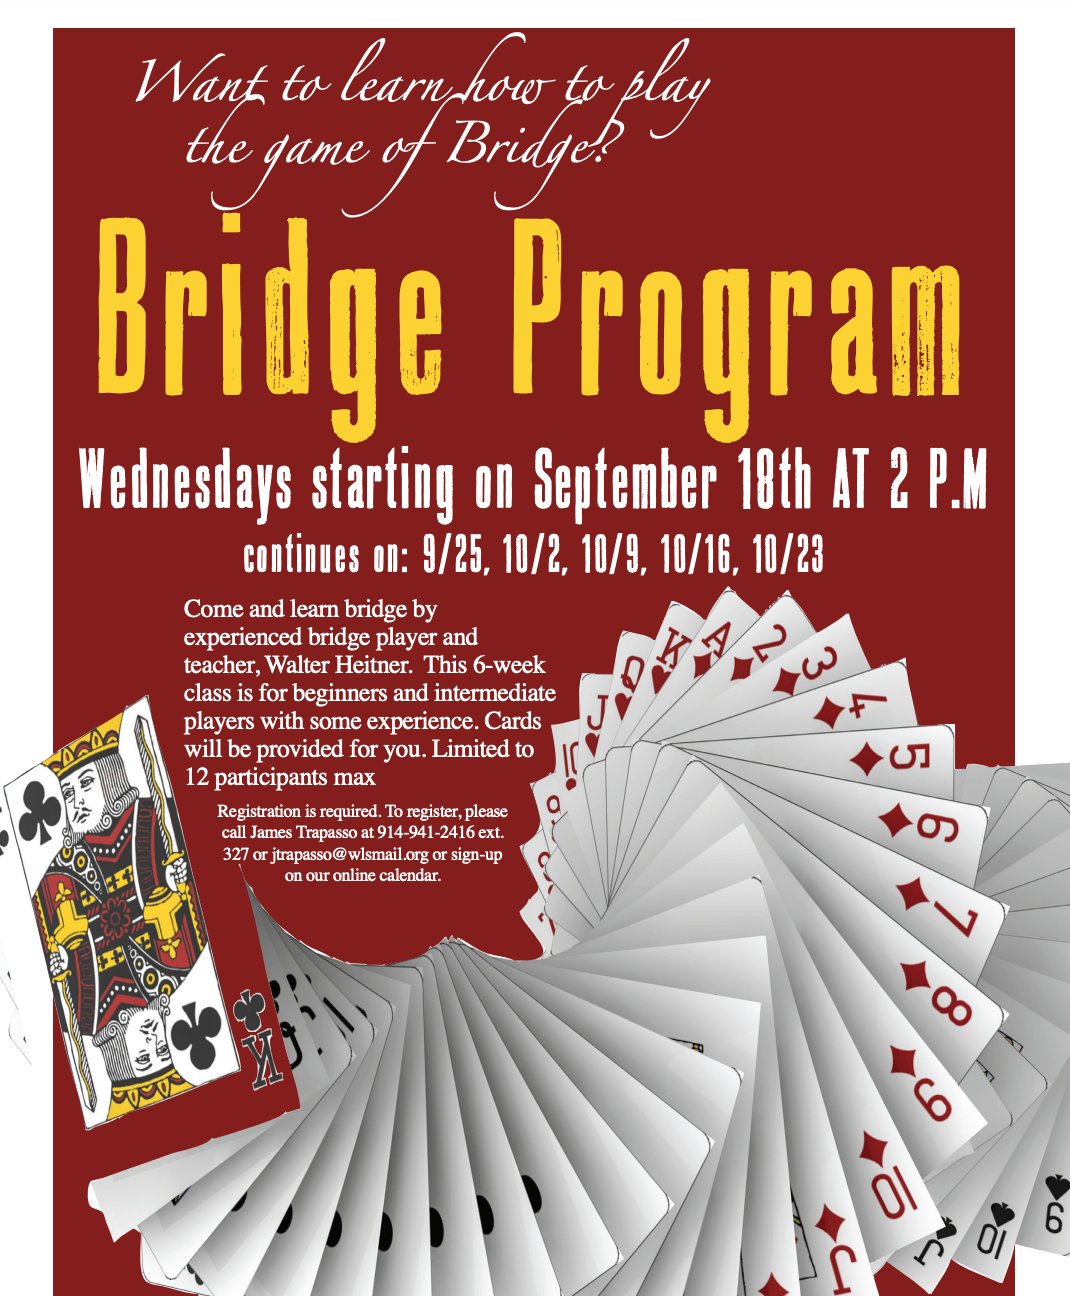 Bridge Program in Ossining